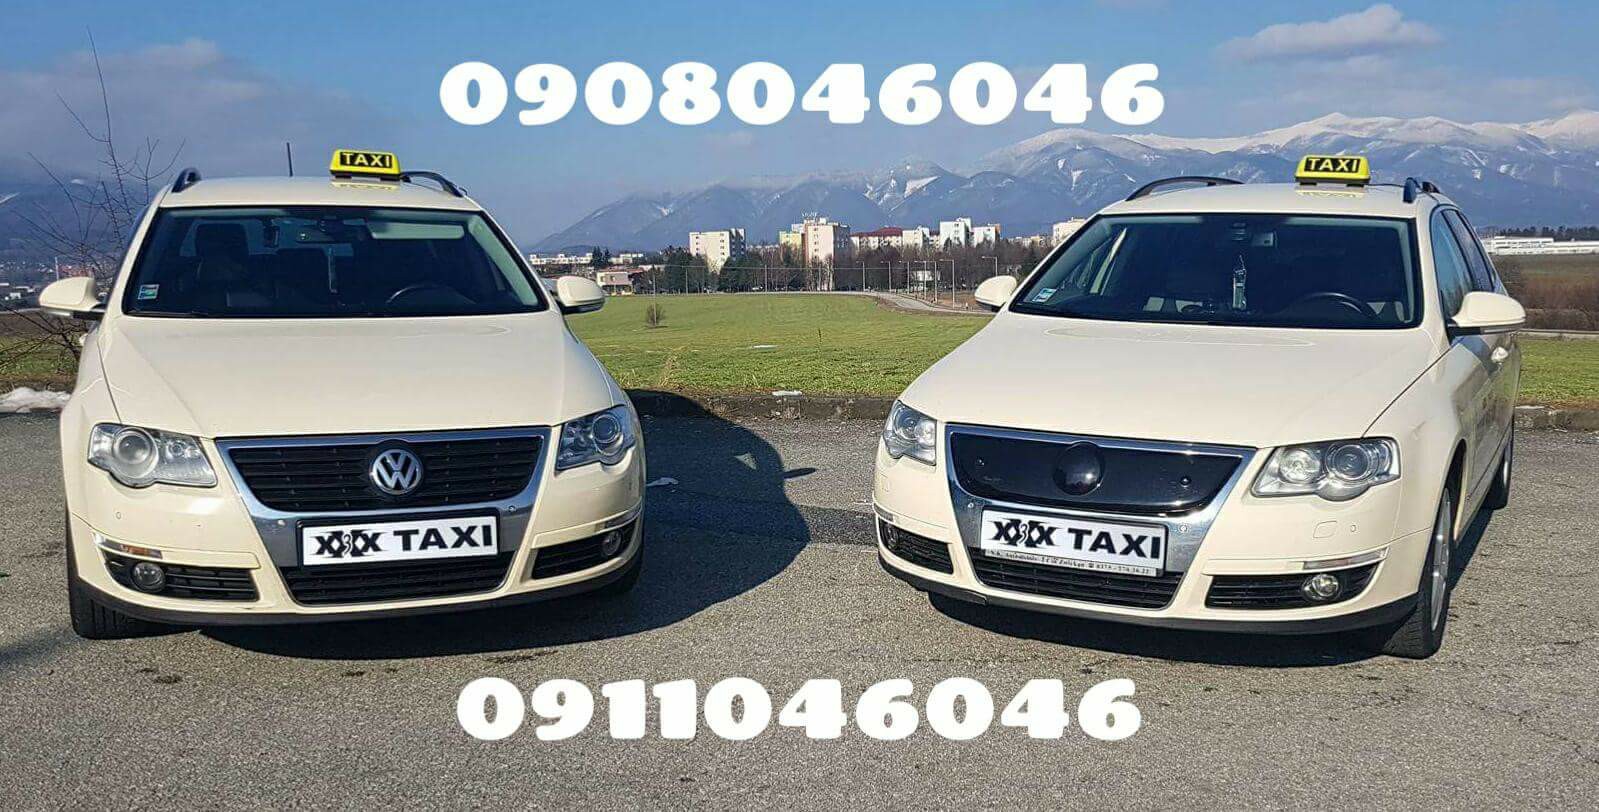 3x Taxi